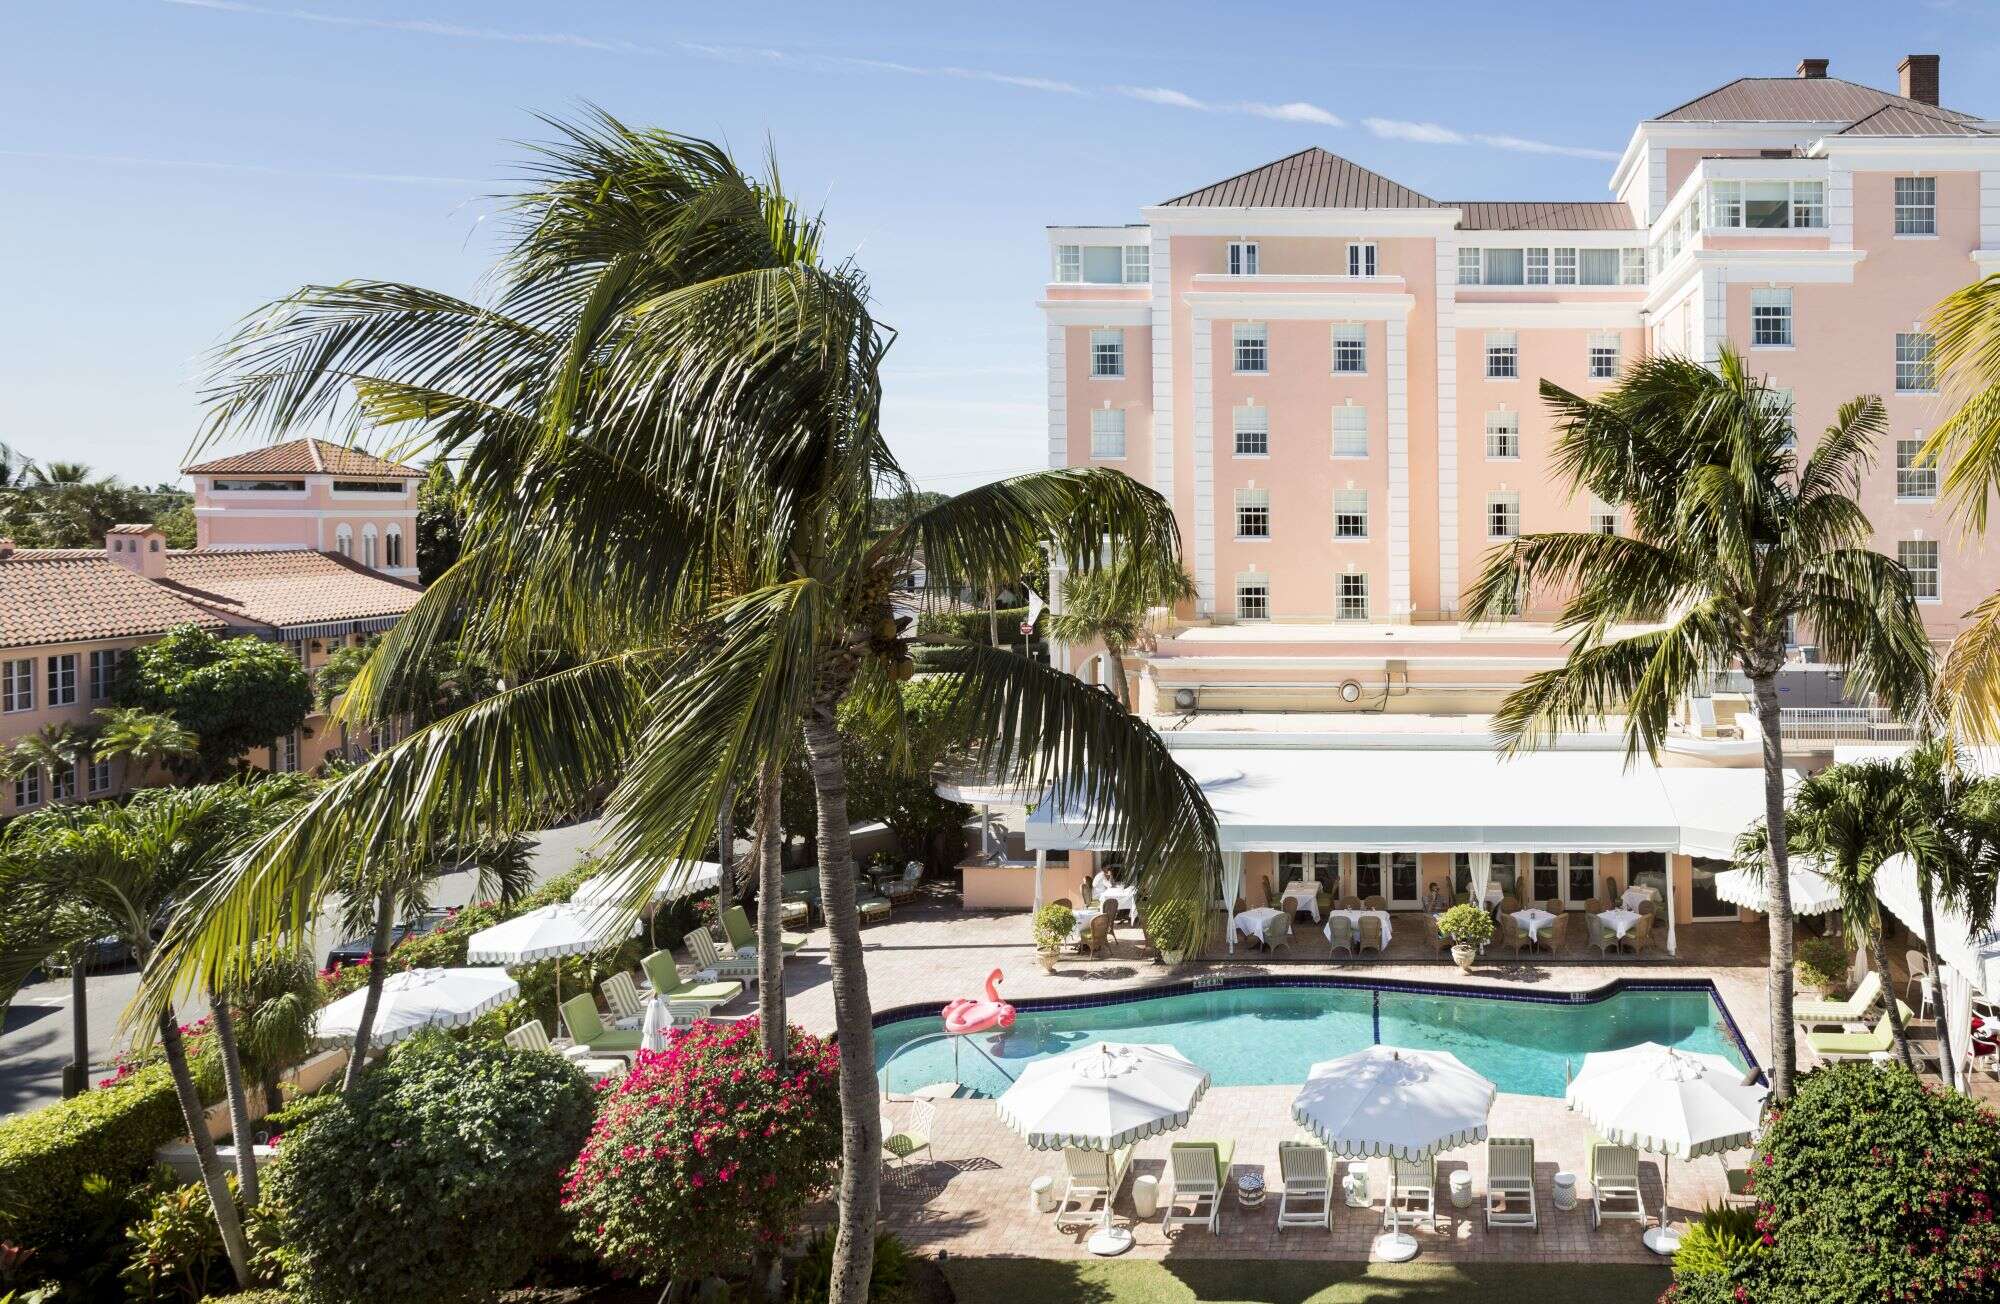 Luxury Palm Beach hotel The Colony pool 